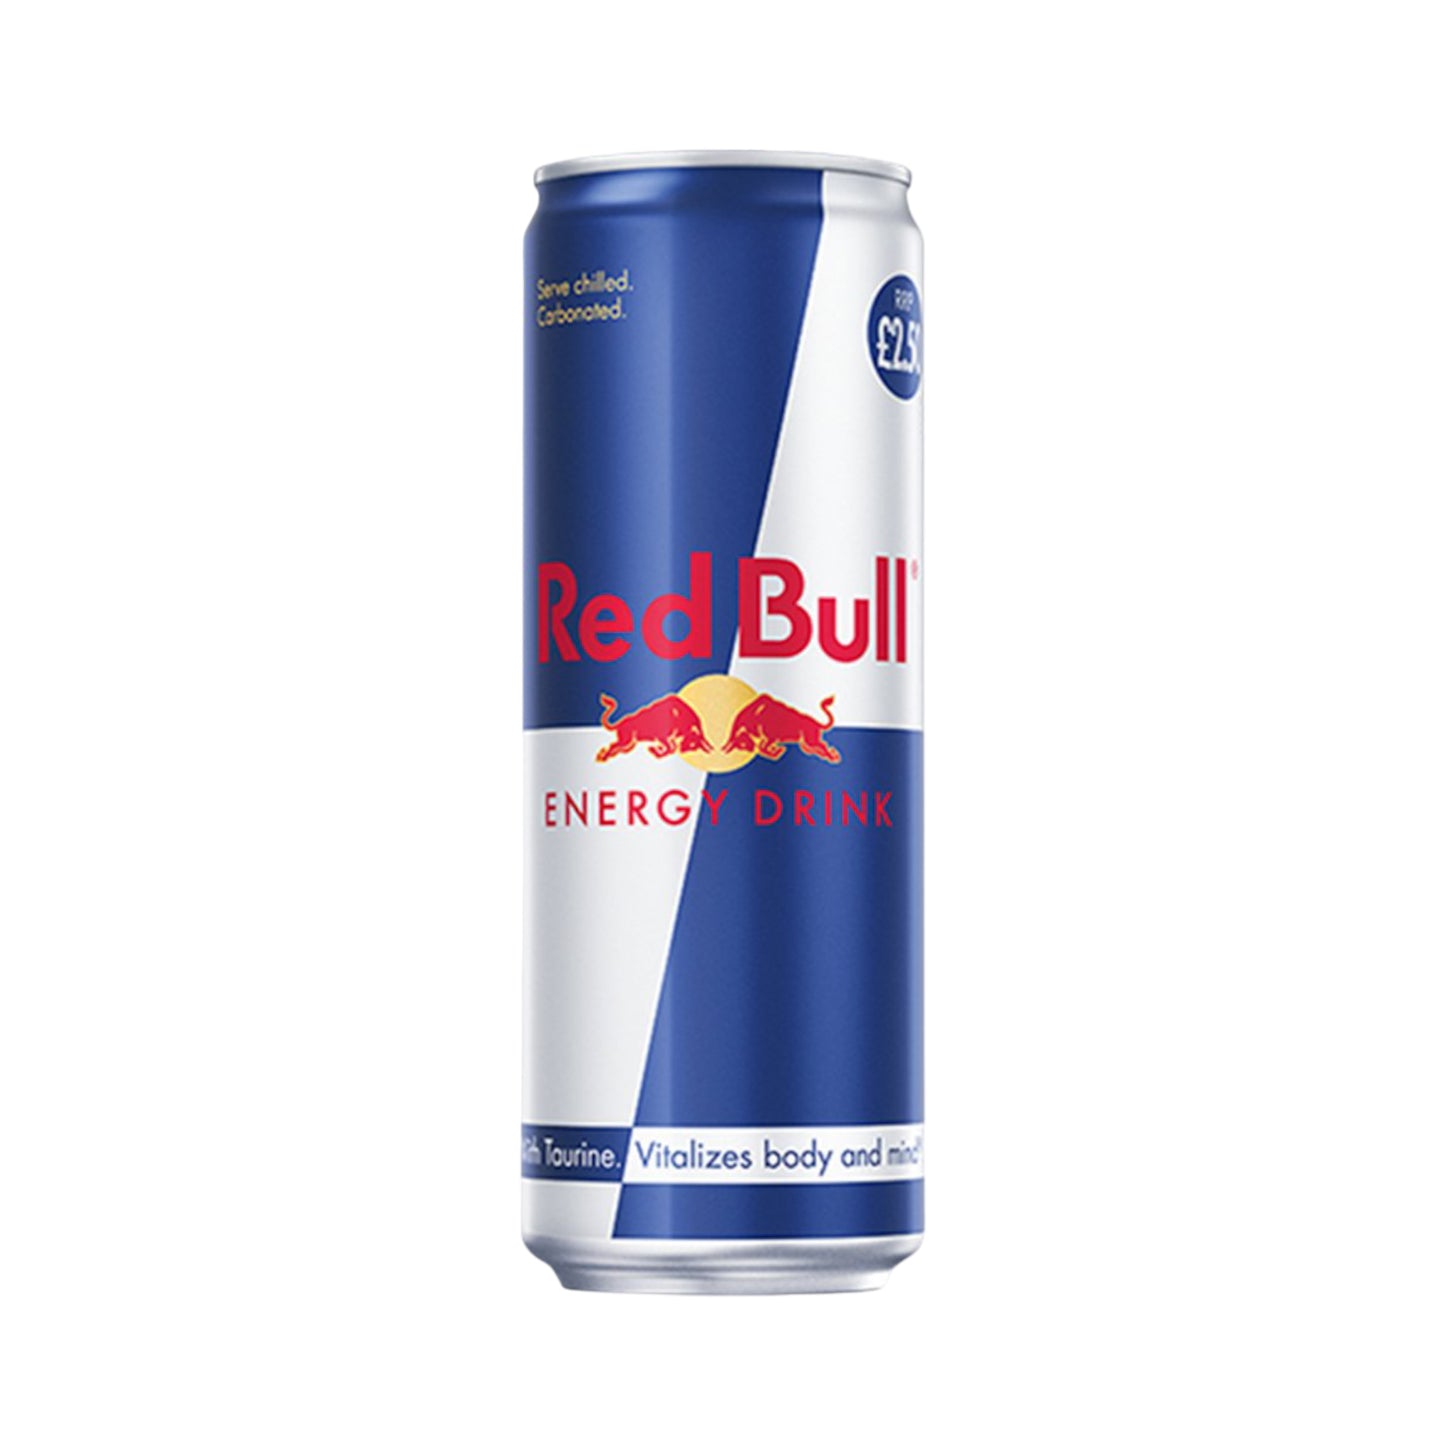 Red Bull Energy Drink - 473ml (PMP £2.50)